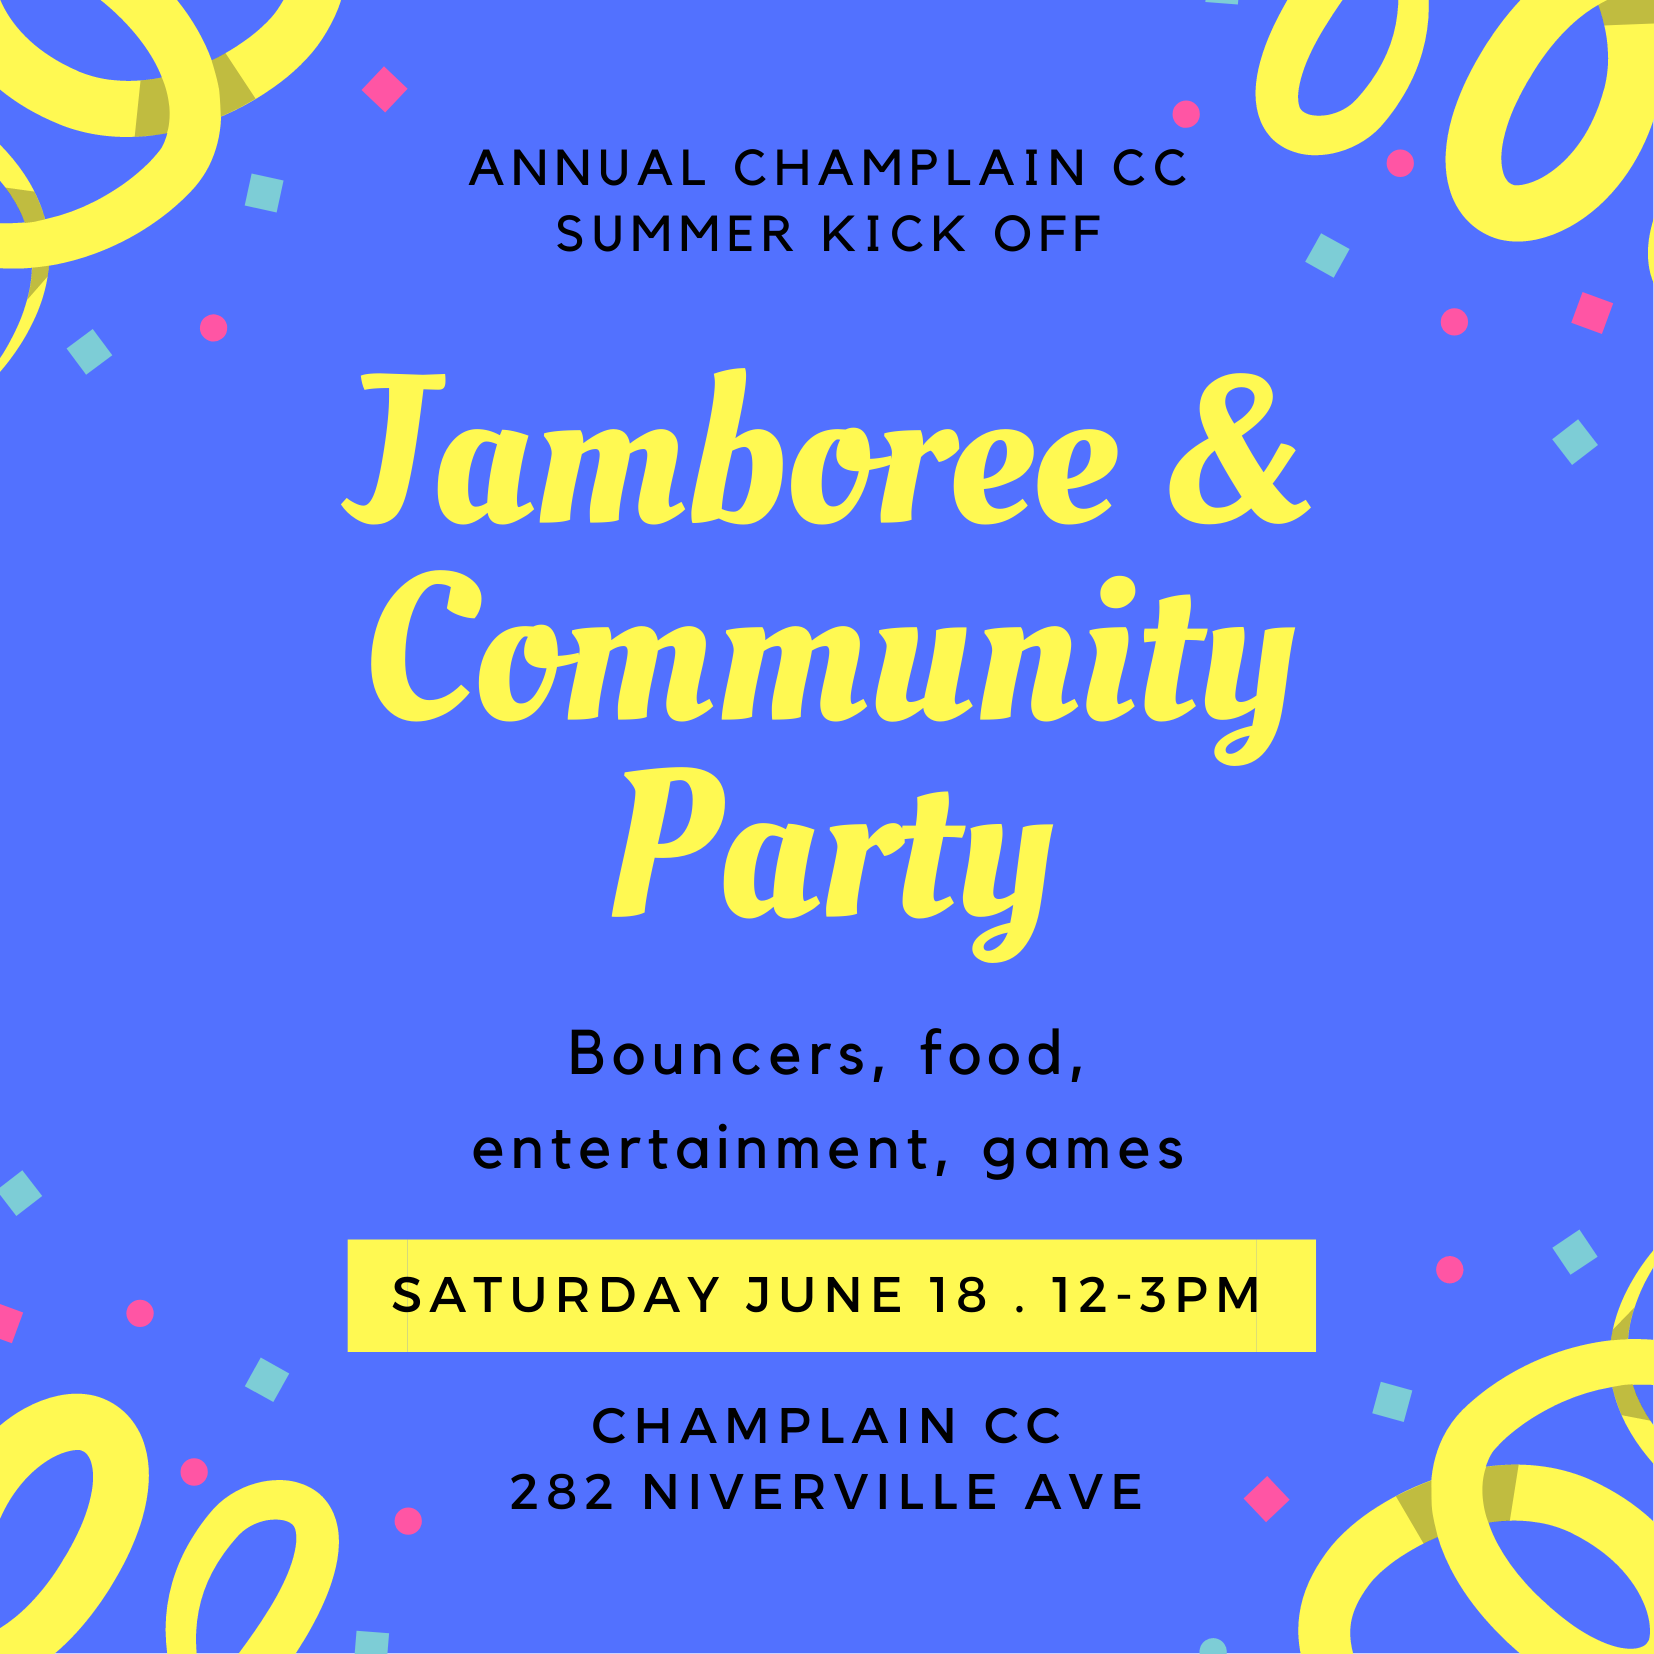 Jamboree & Community Party